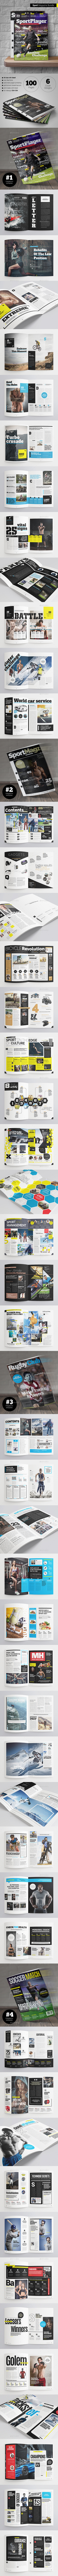 Sport Magazine Bundle (4 in 1) in Magazine Templates